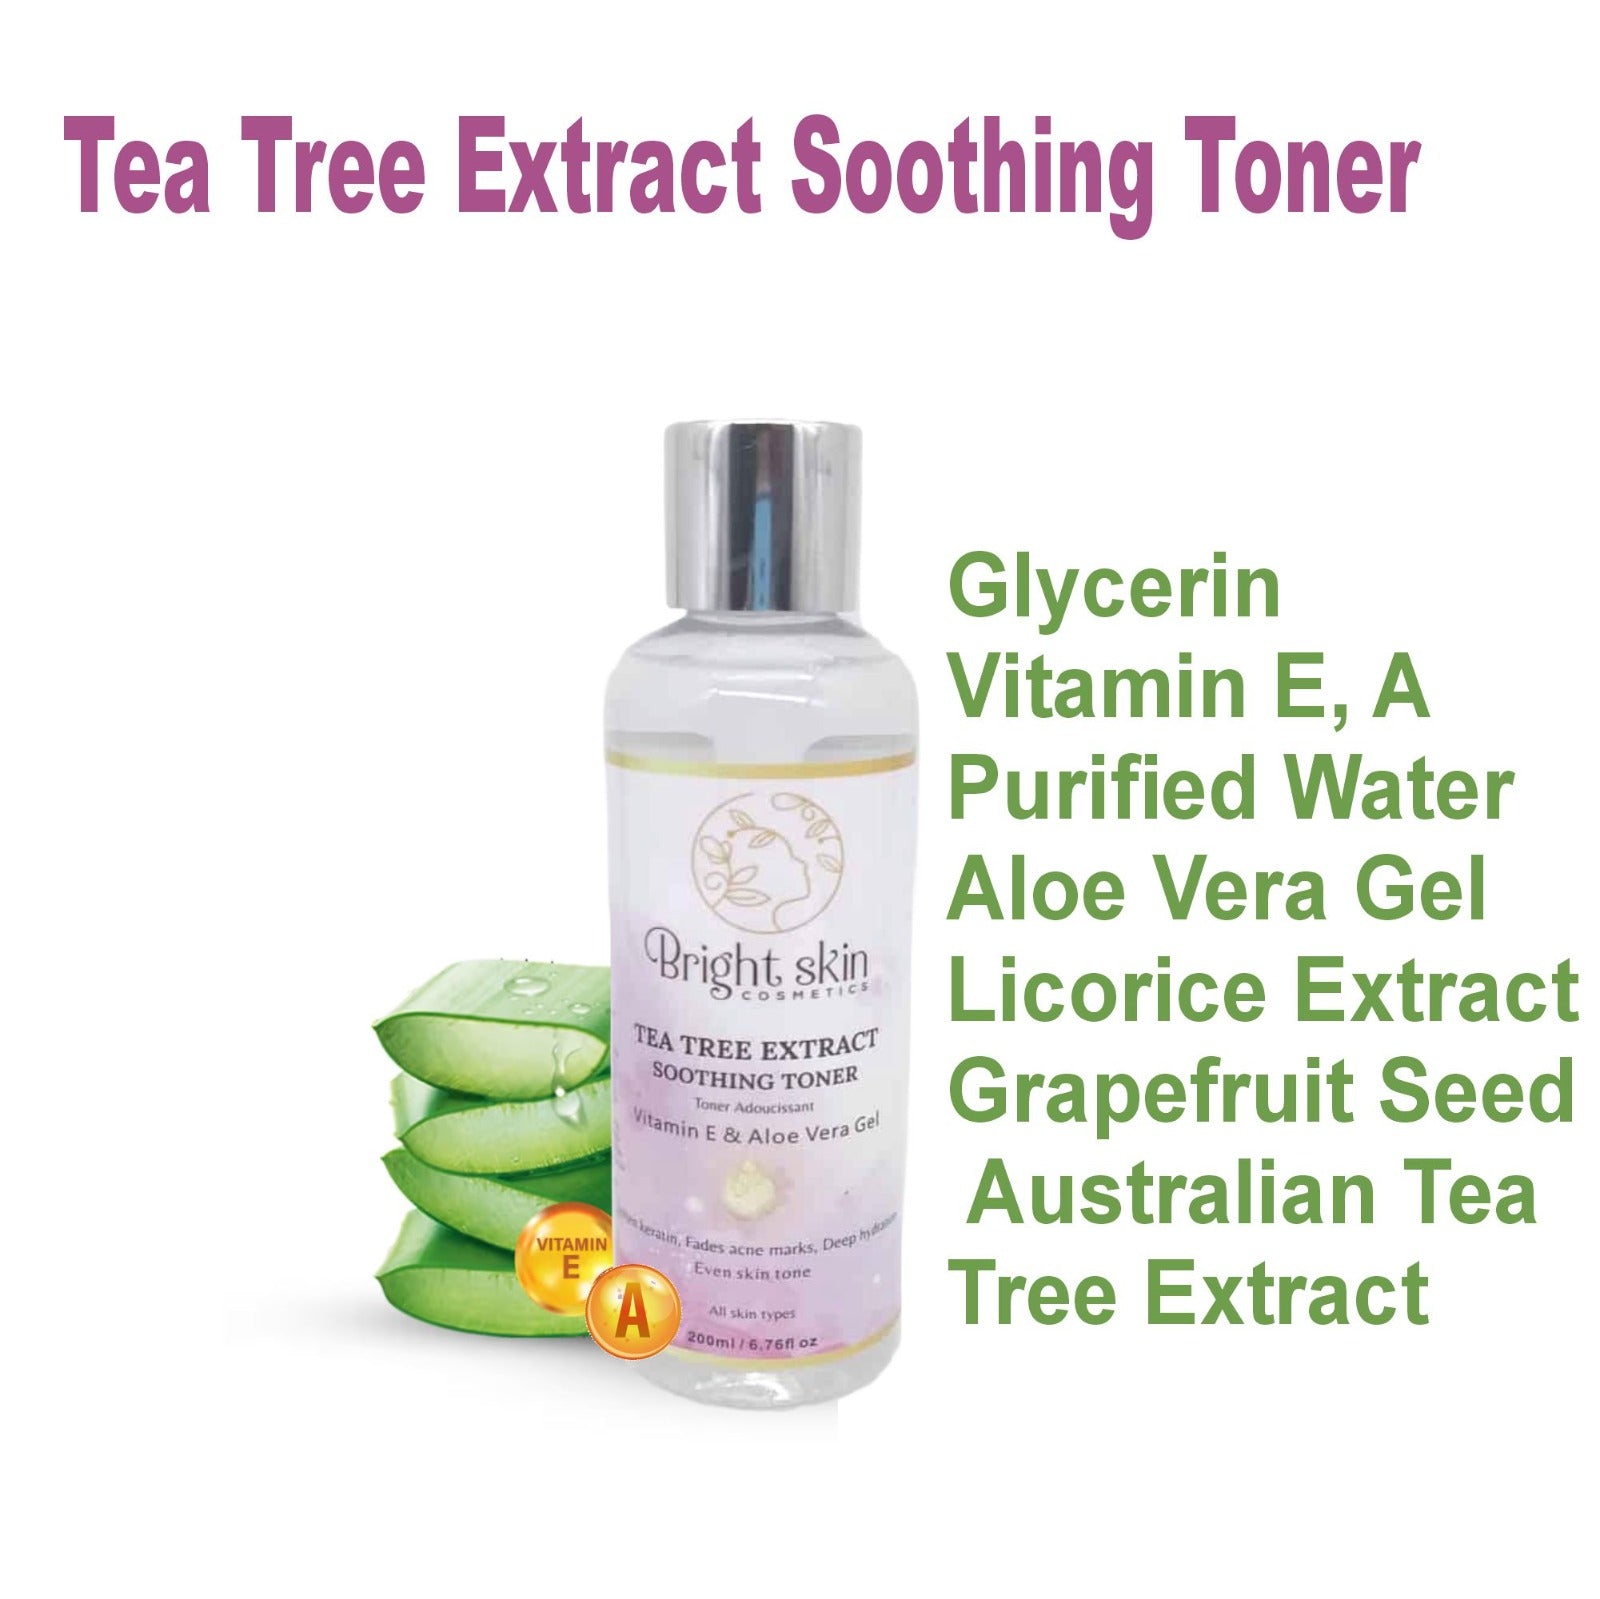 Bright Skin Tea Tree Extract Soothing Toner